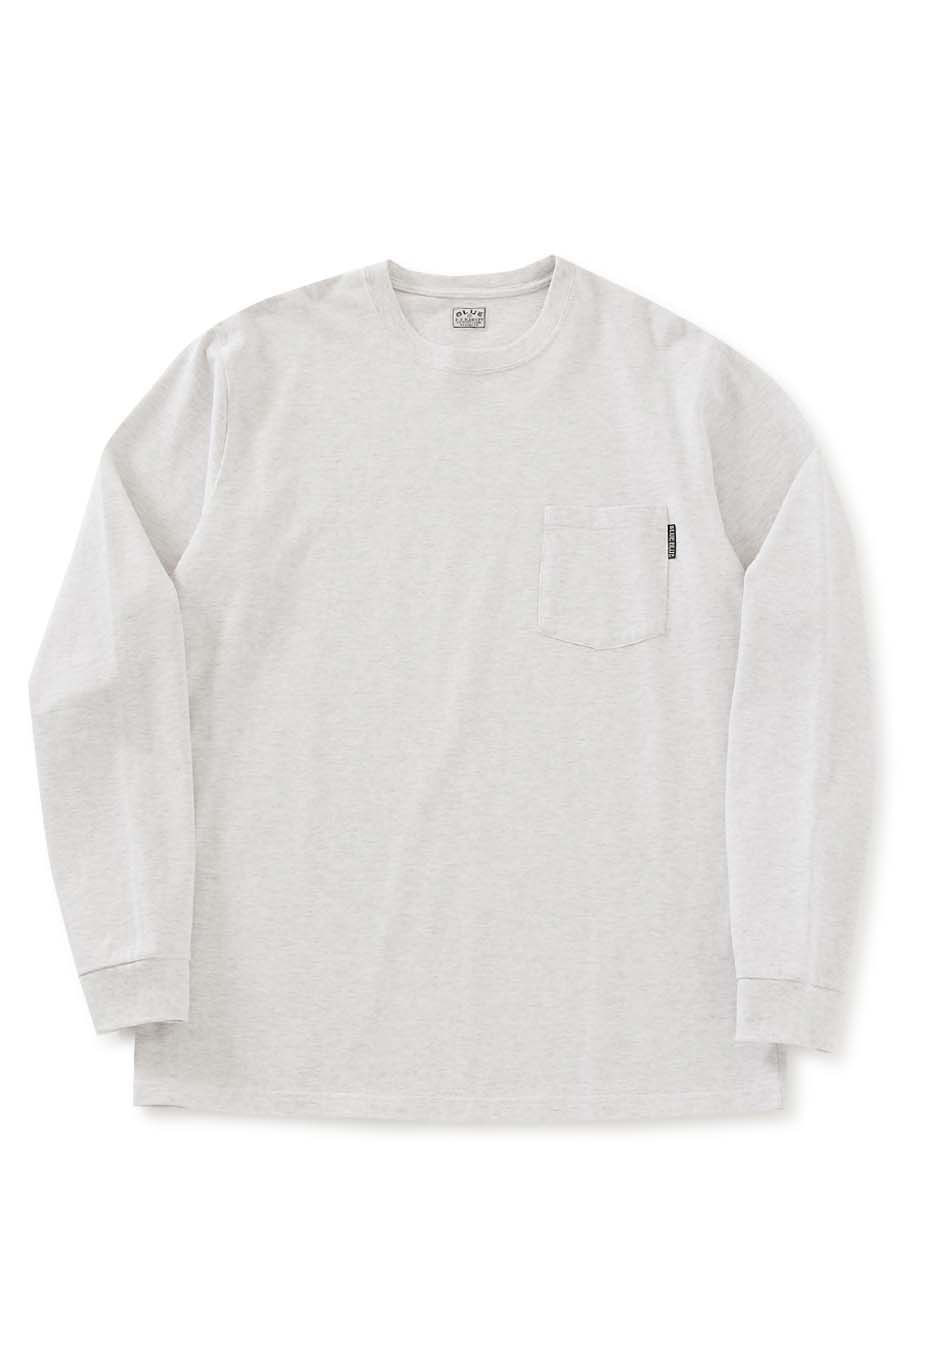 Heavy plain stitch Long Sleeve Pocket T-shirts